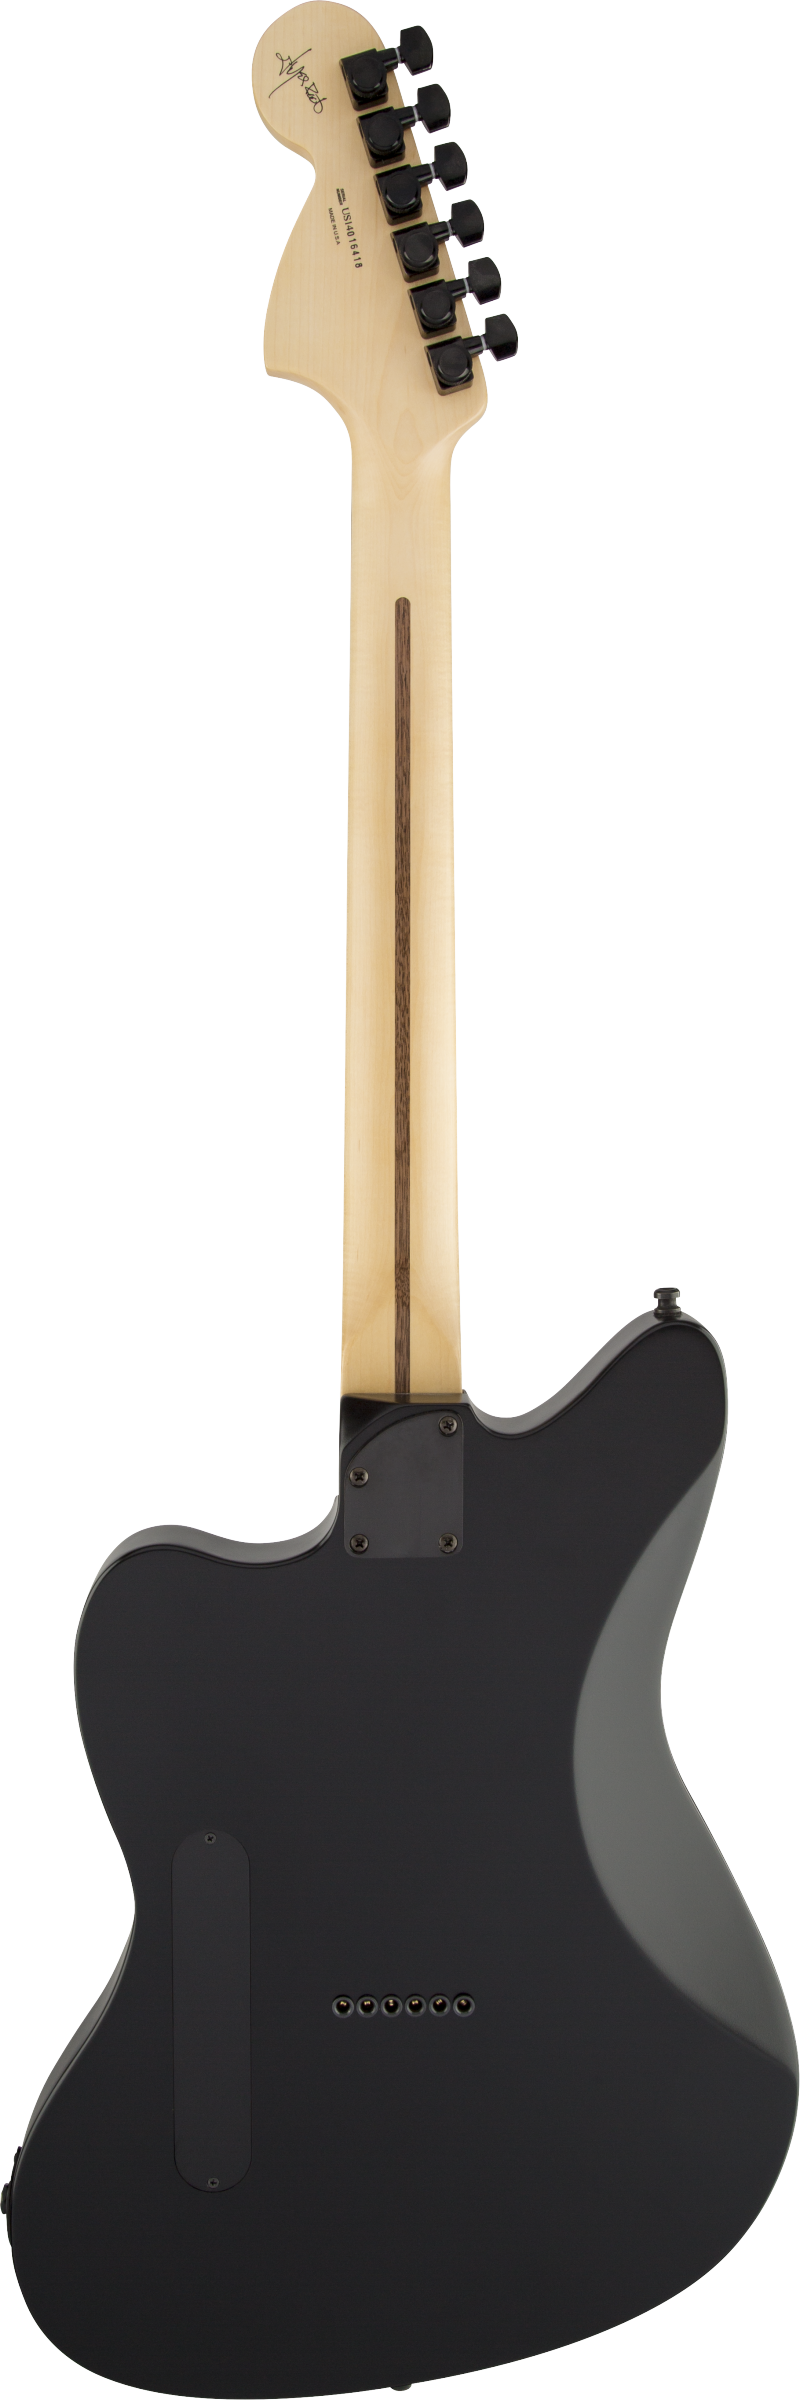 Jim Root Jazzmaster Flat Black Ebony Fingerboard